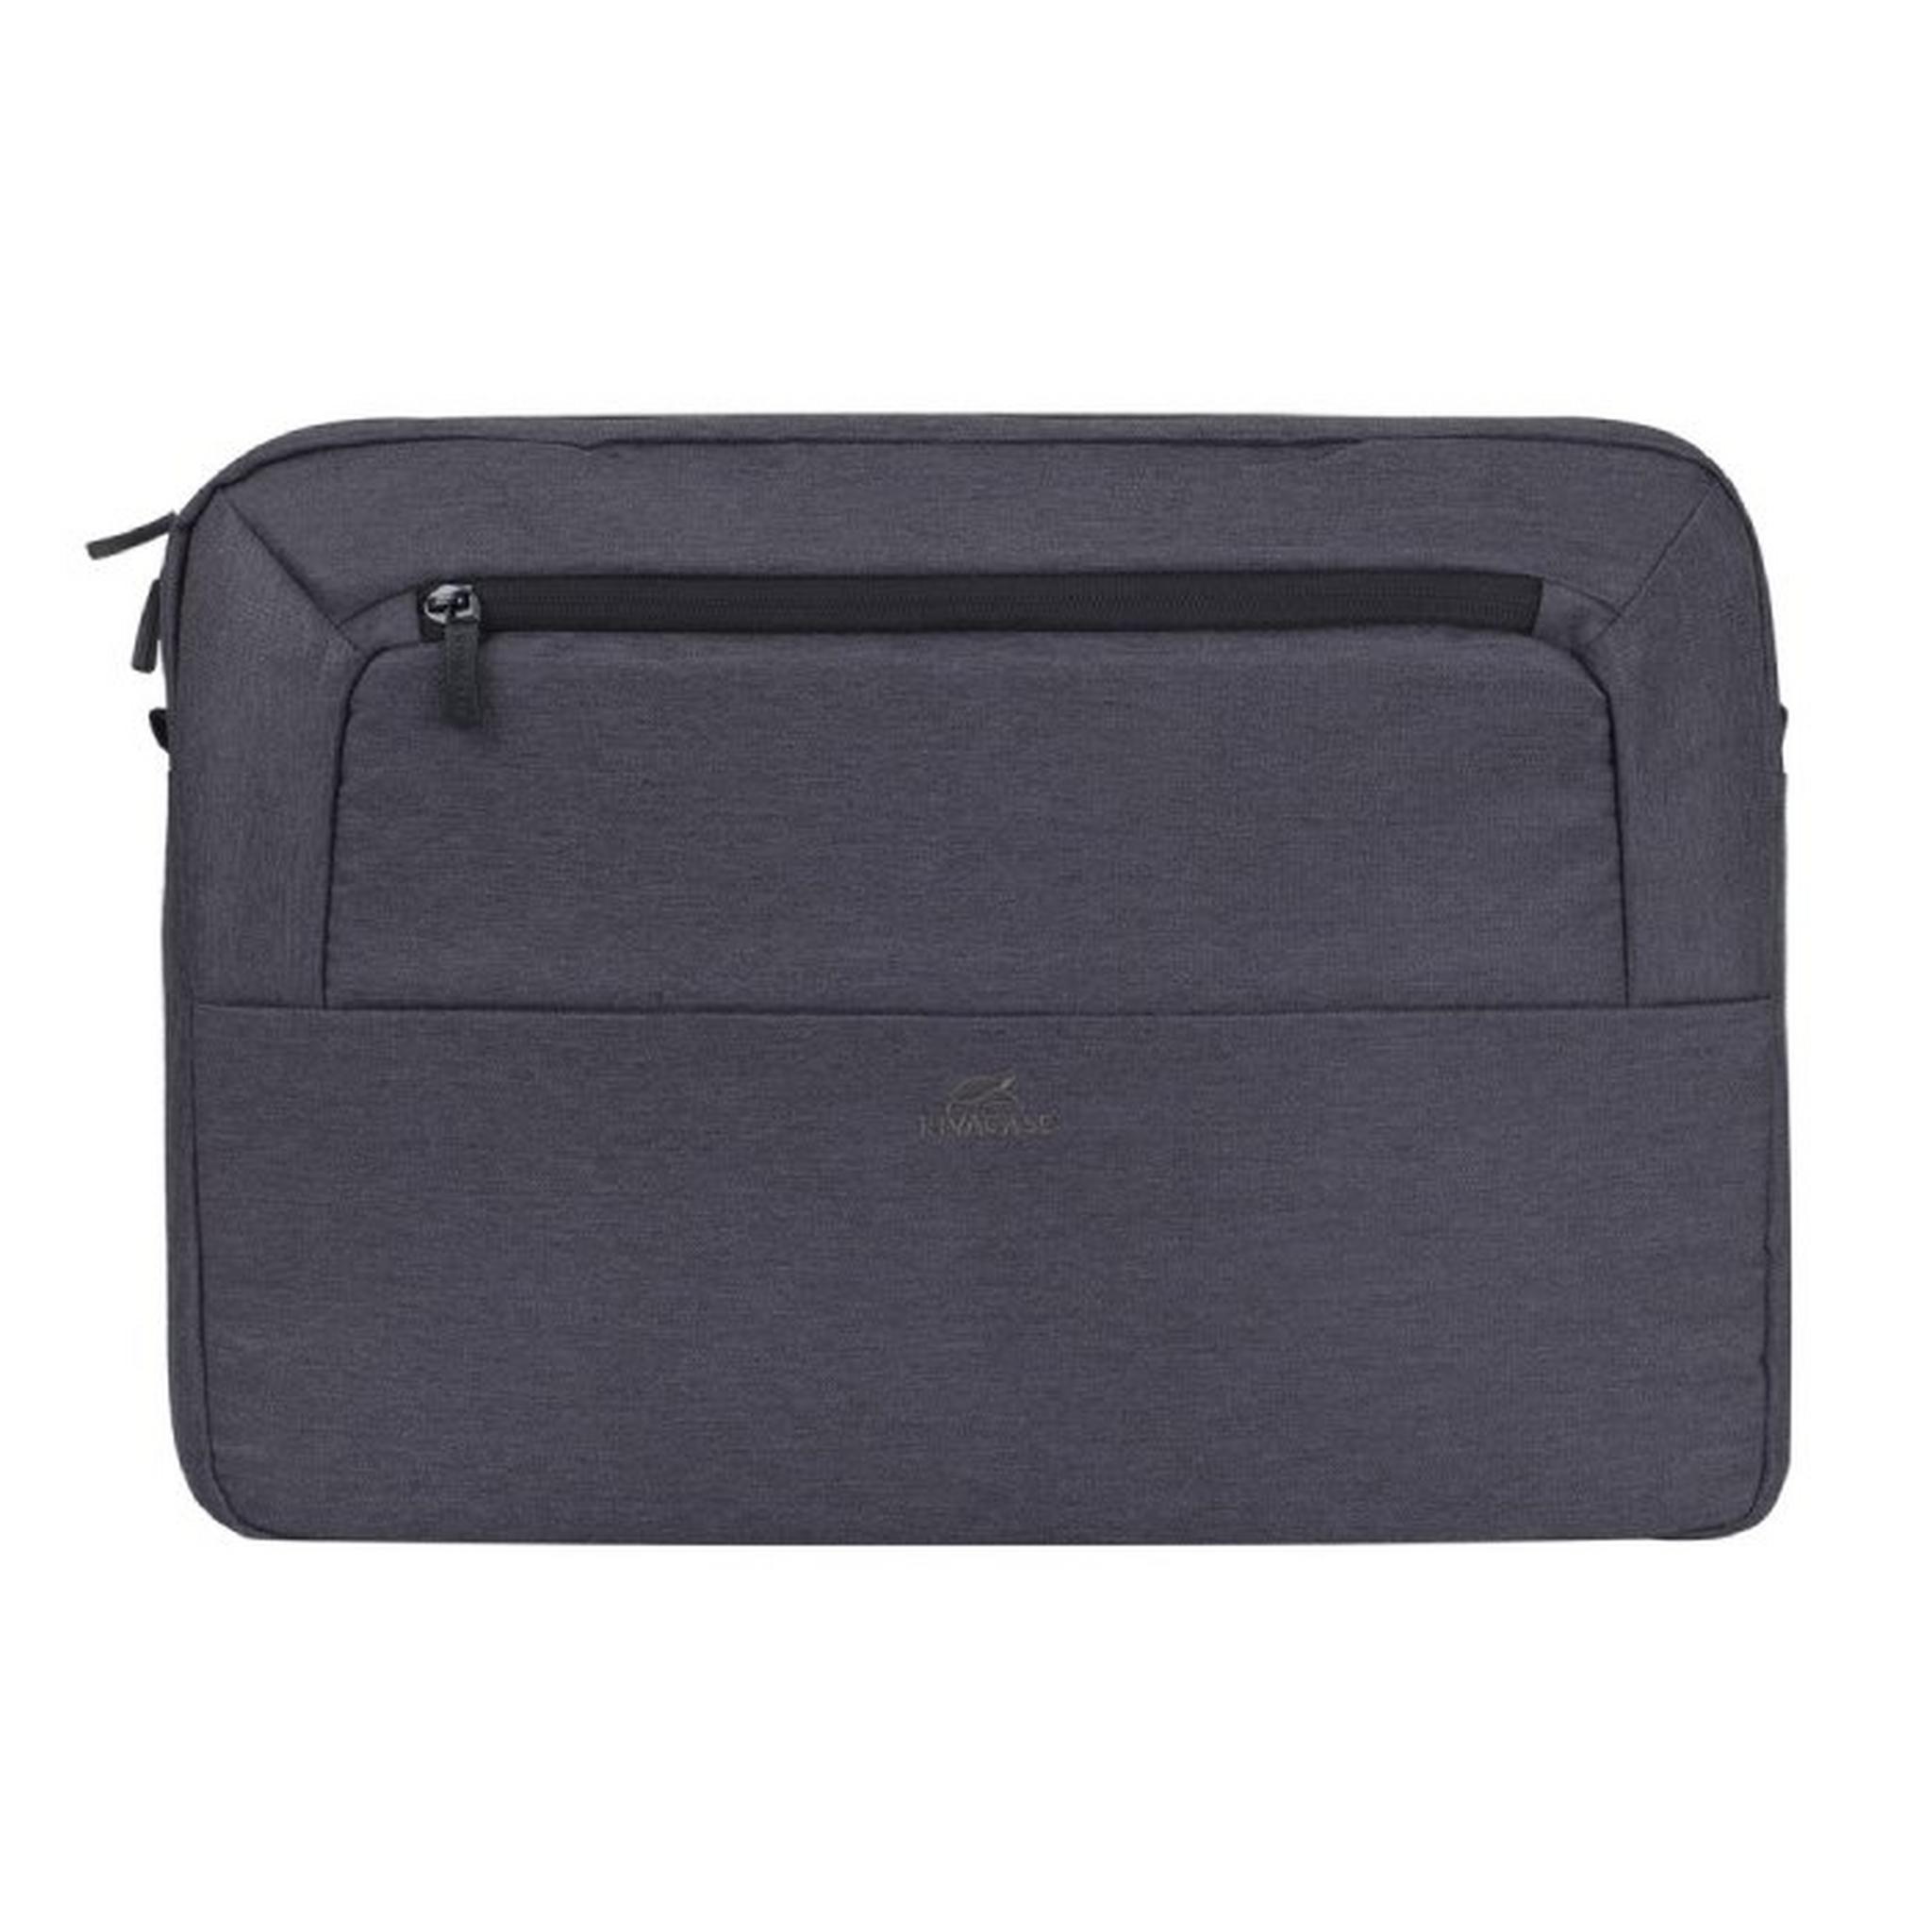 RIVA Eco Laptop Shoulder Bag, 15.6-inch, SUZUKA-ECO-7730 – Black